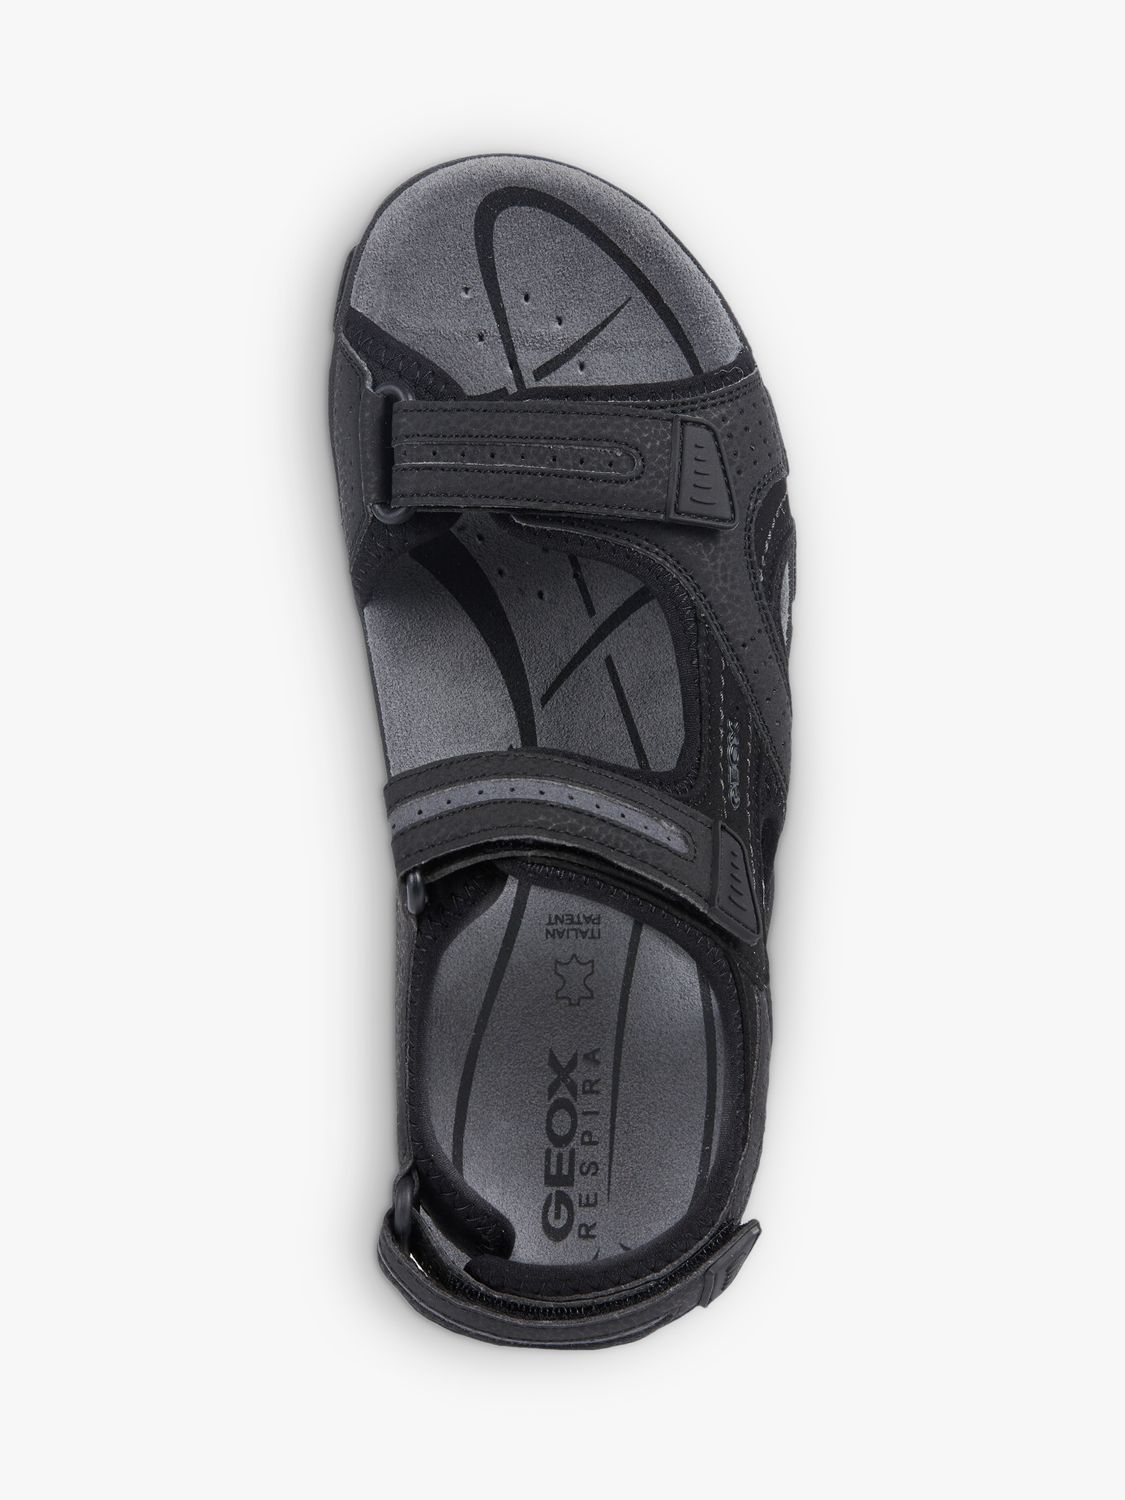 Geox Strada Sandals, Black/Stone, 9